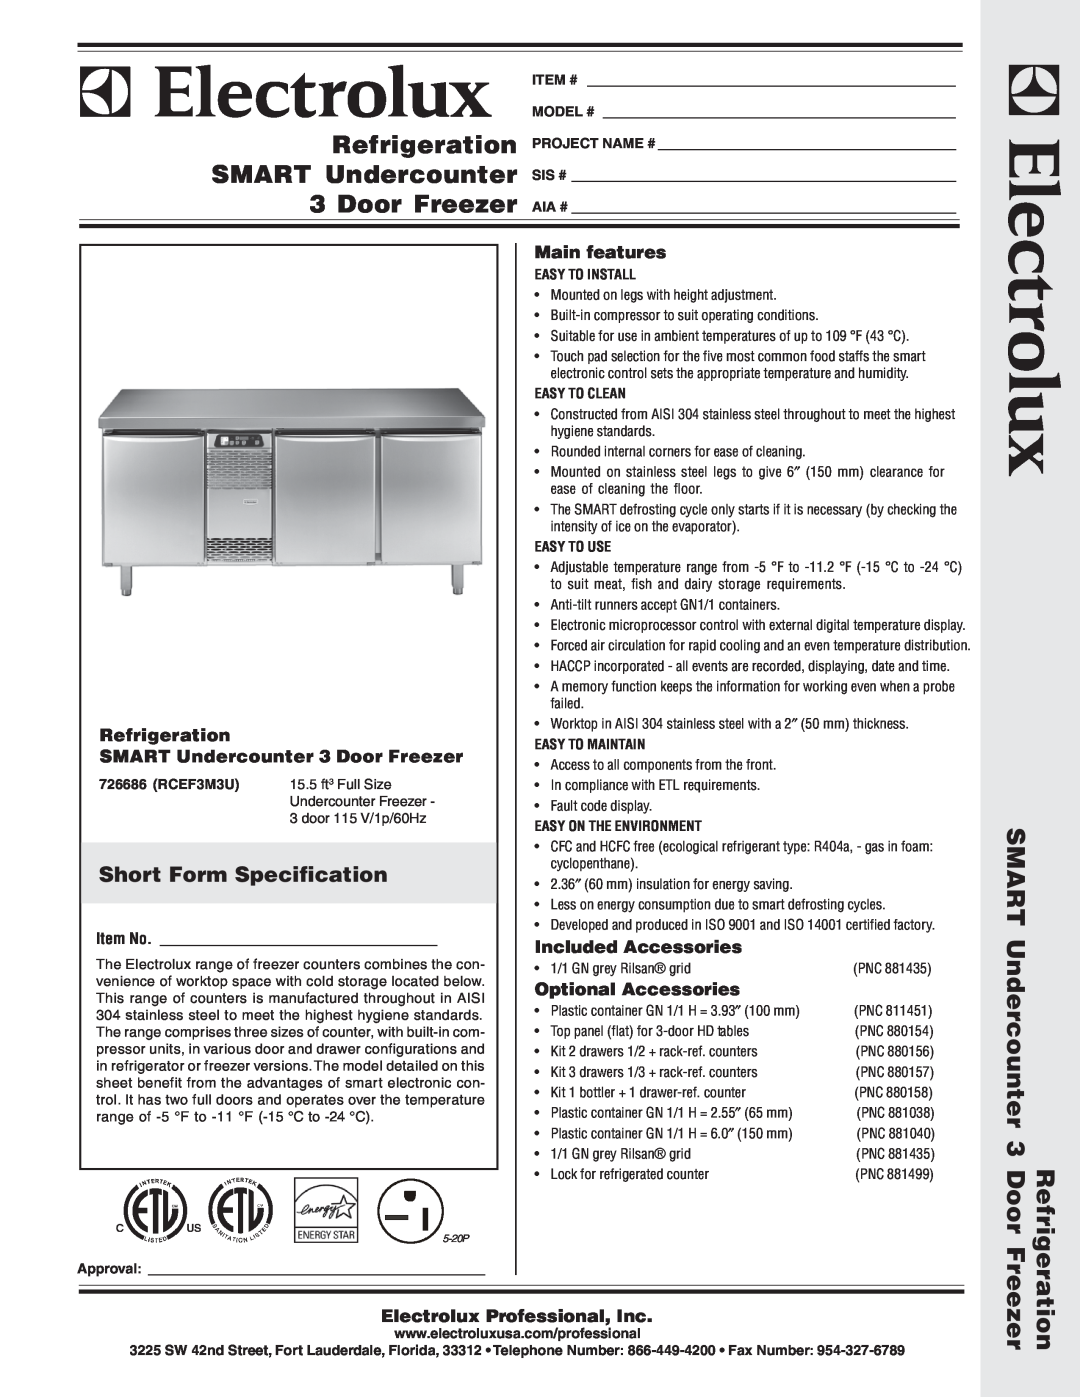 Electrolux RCEF3M3U manual Short Form Specification, Main features, Refrigeration, SMART Undercounter 3 Door Freezer 